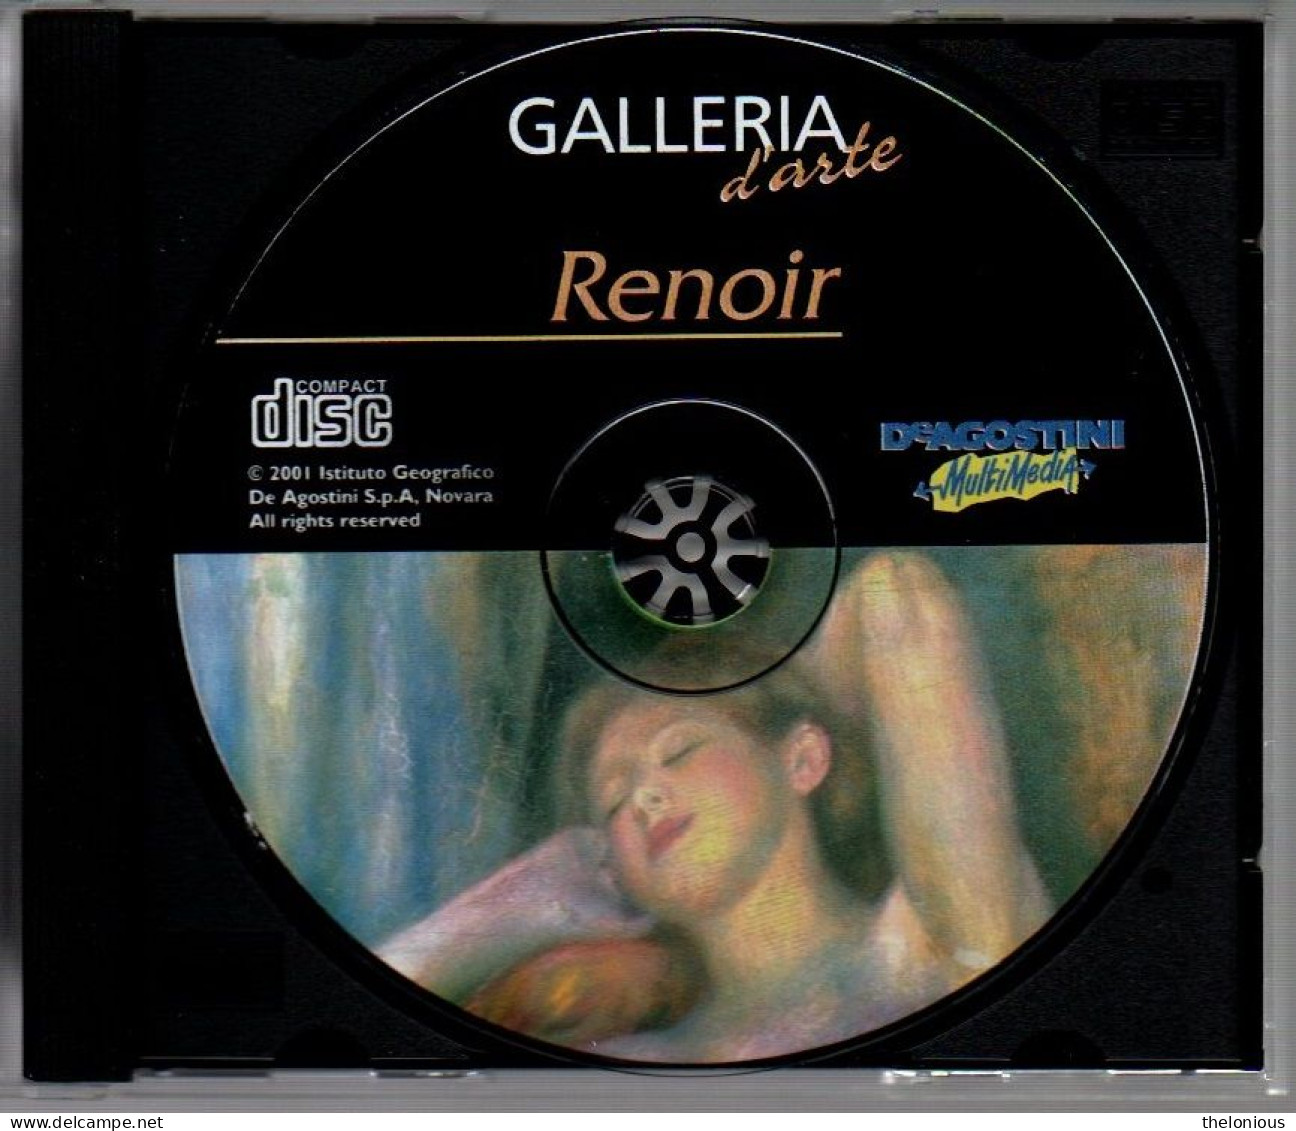 # CD ROM Galleria D'Arte - RENOIR - De Agostini Moltimedia 2001 - Andere Formaten